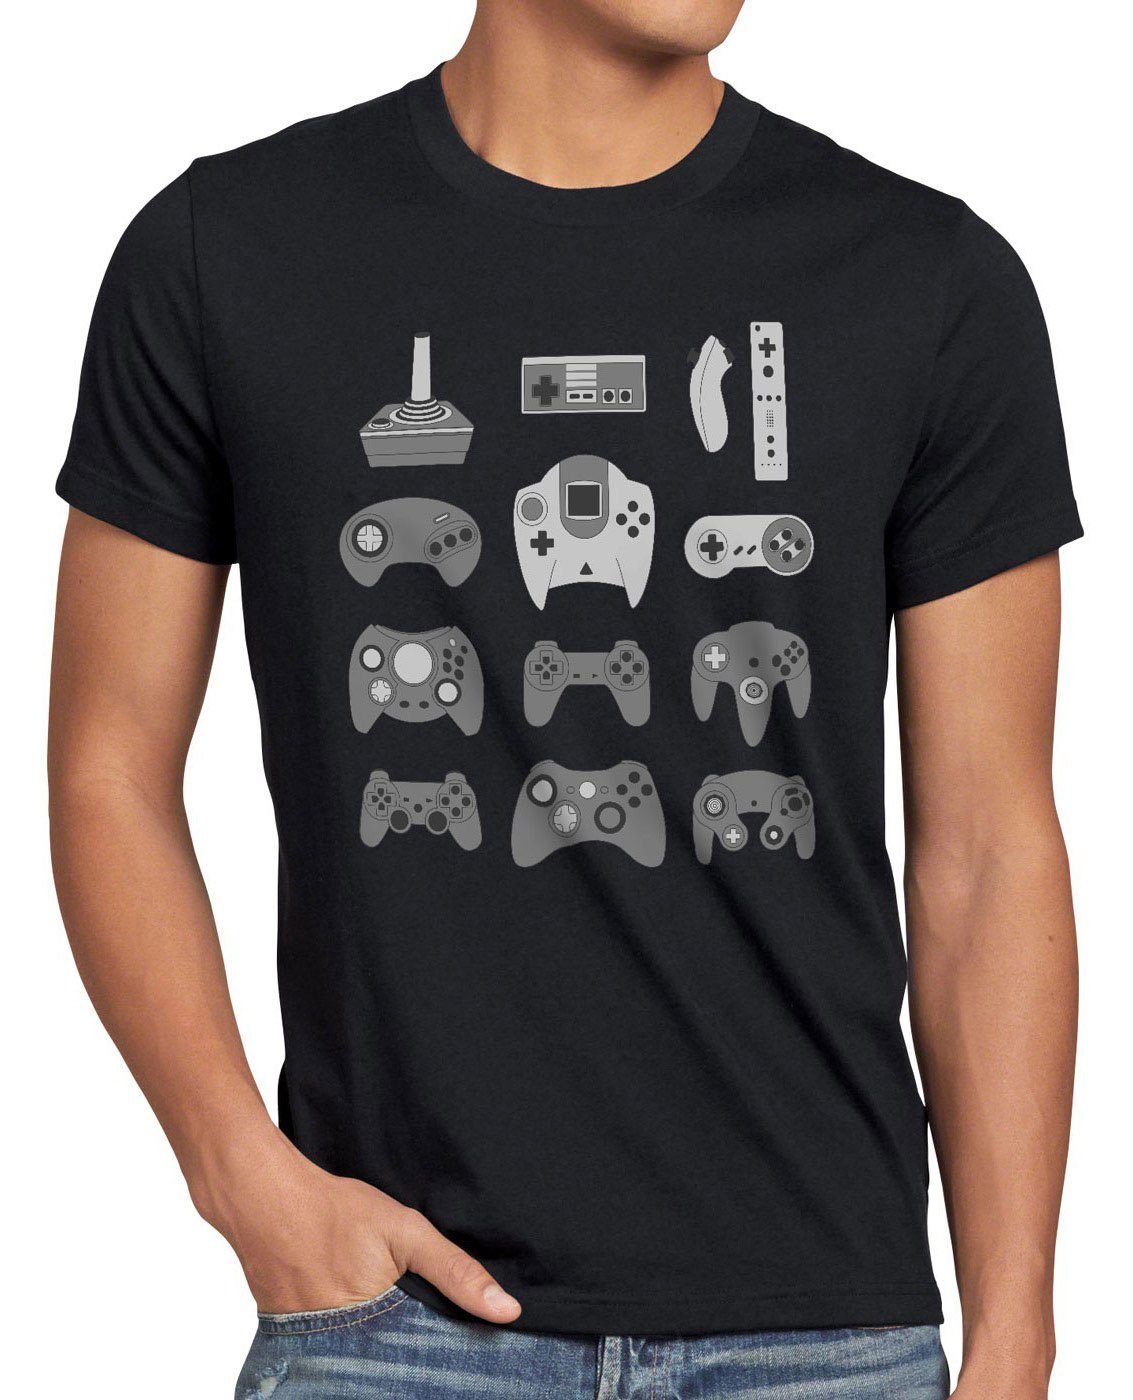 style3 Print-Shirt Herren T-Shirt Gamer super nintendo kart nes snes zelda mario sega sonic wii switch ps4 schwarz